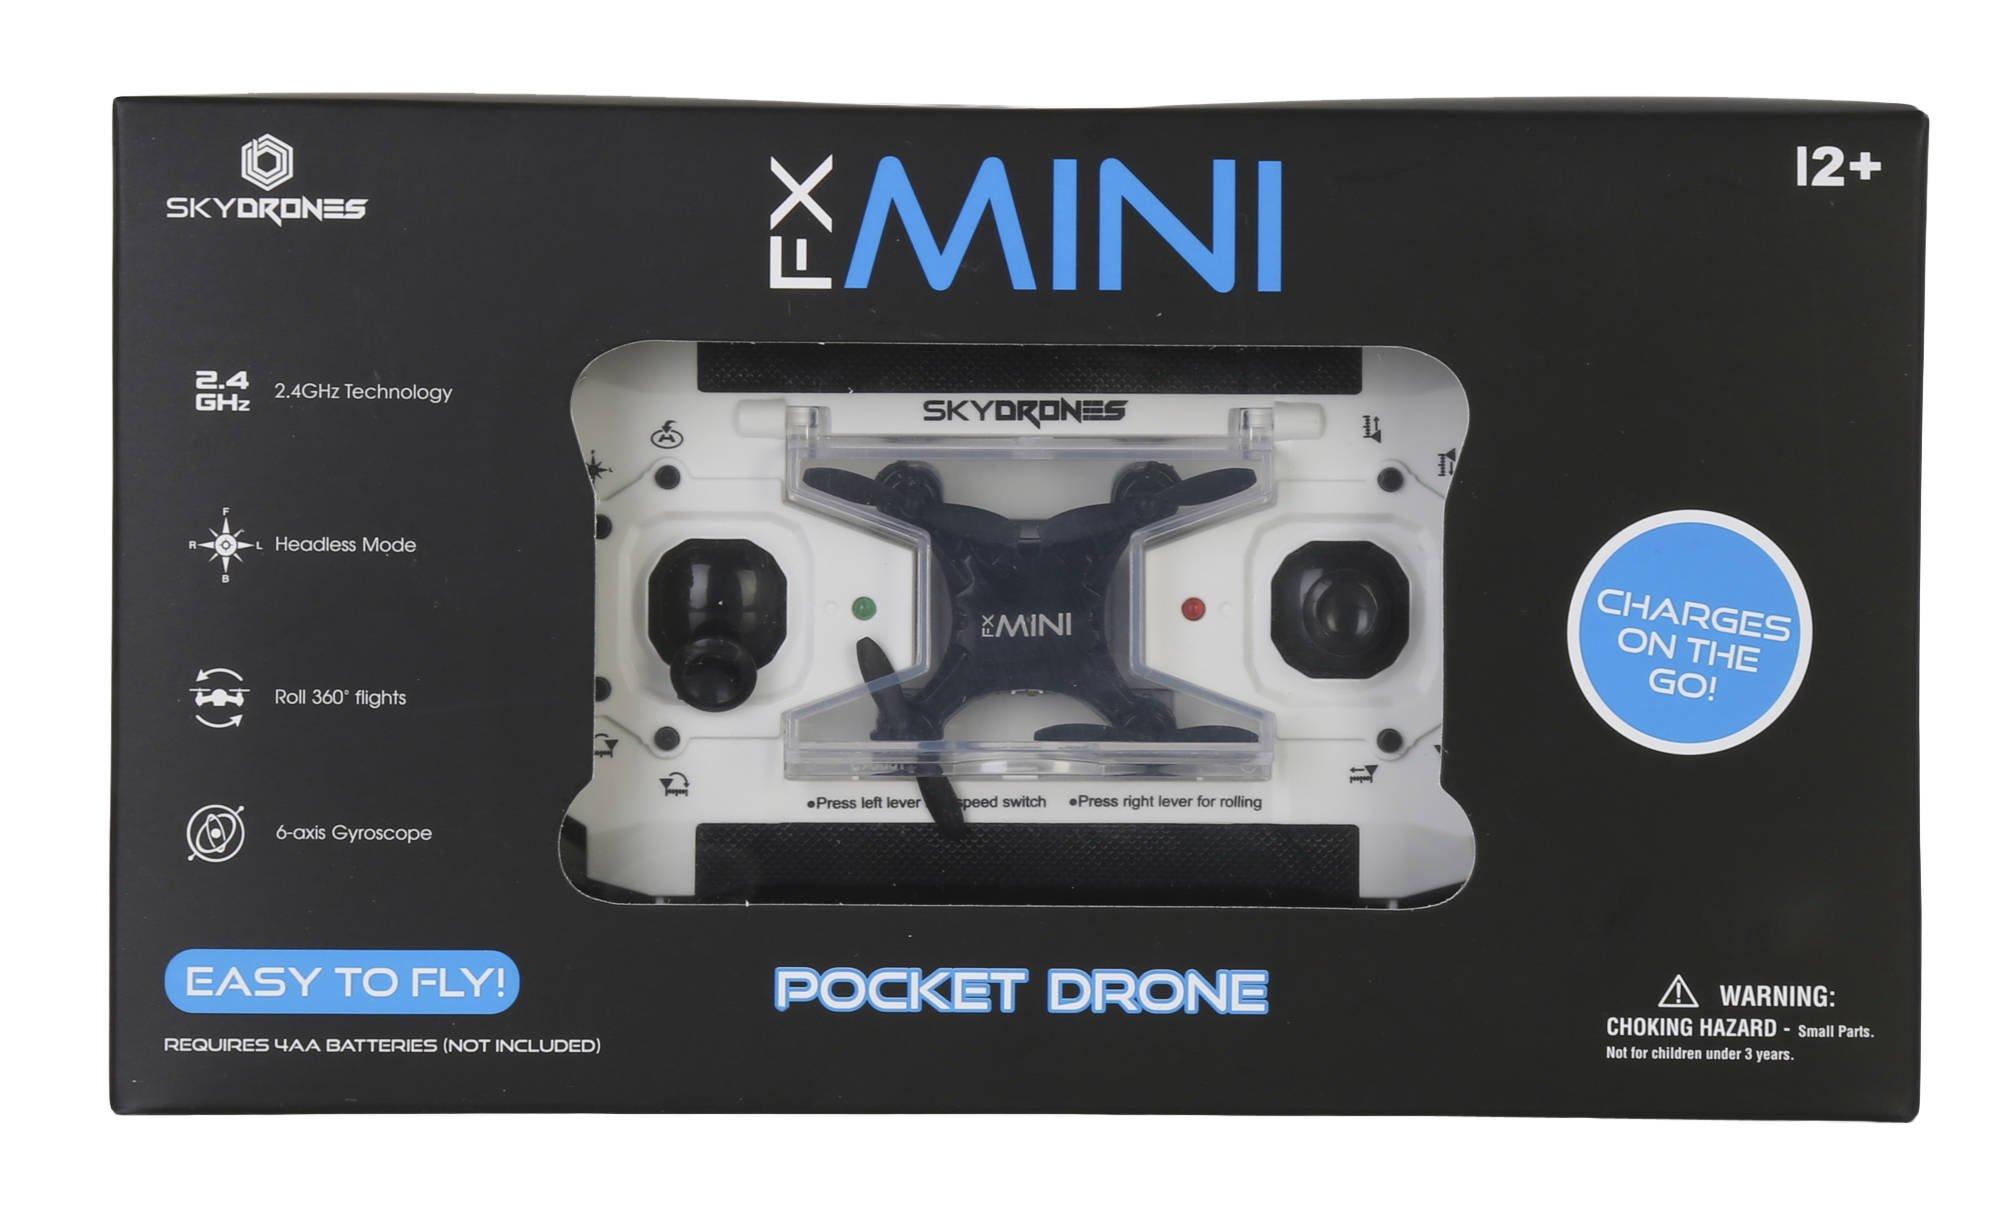 sky drones fx mini pocket drone